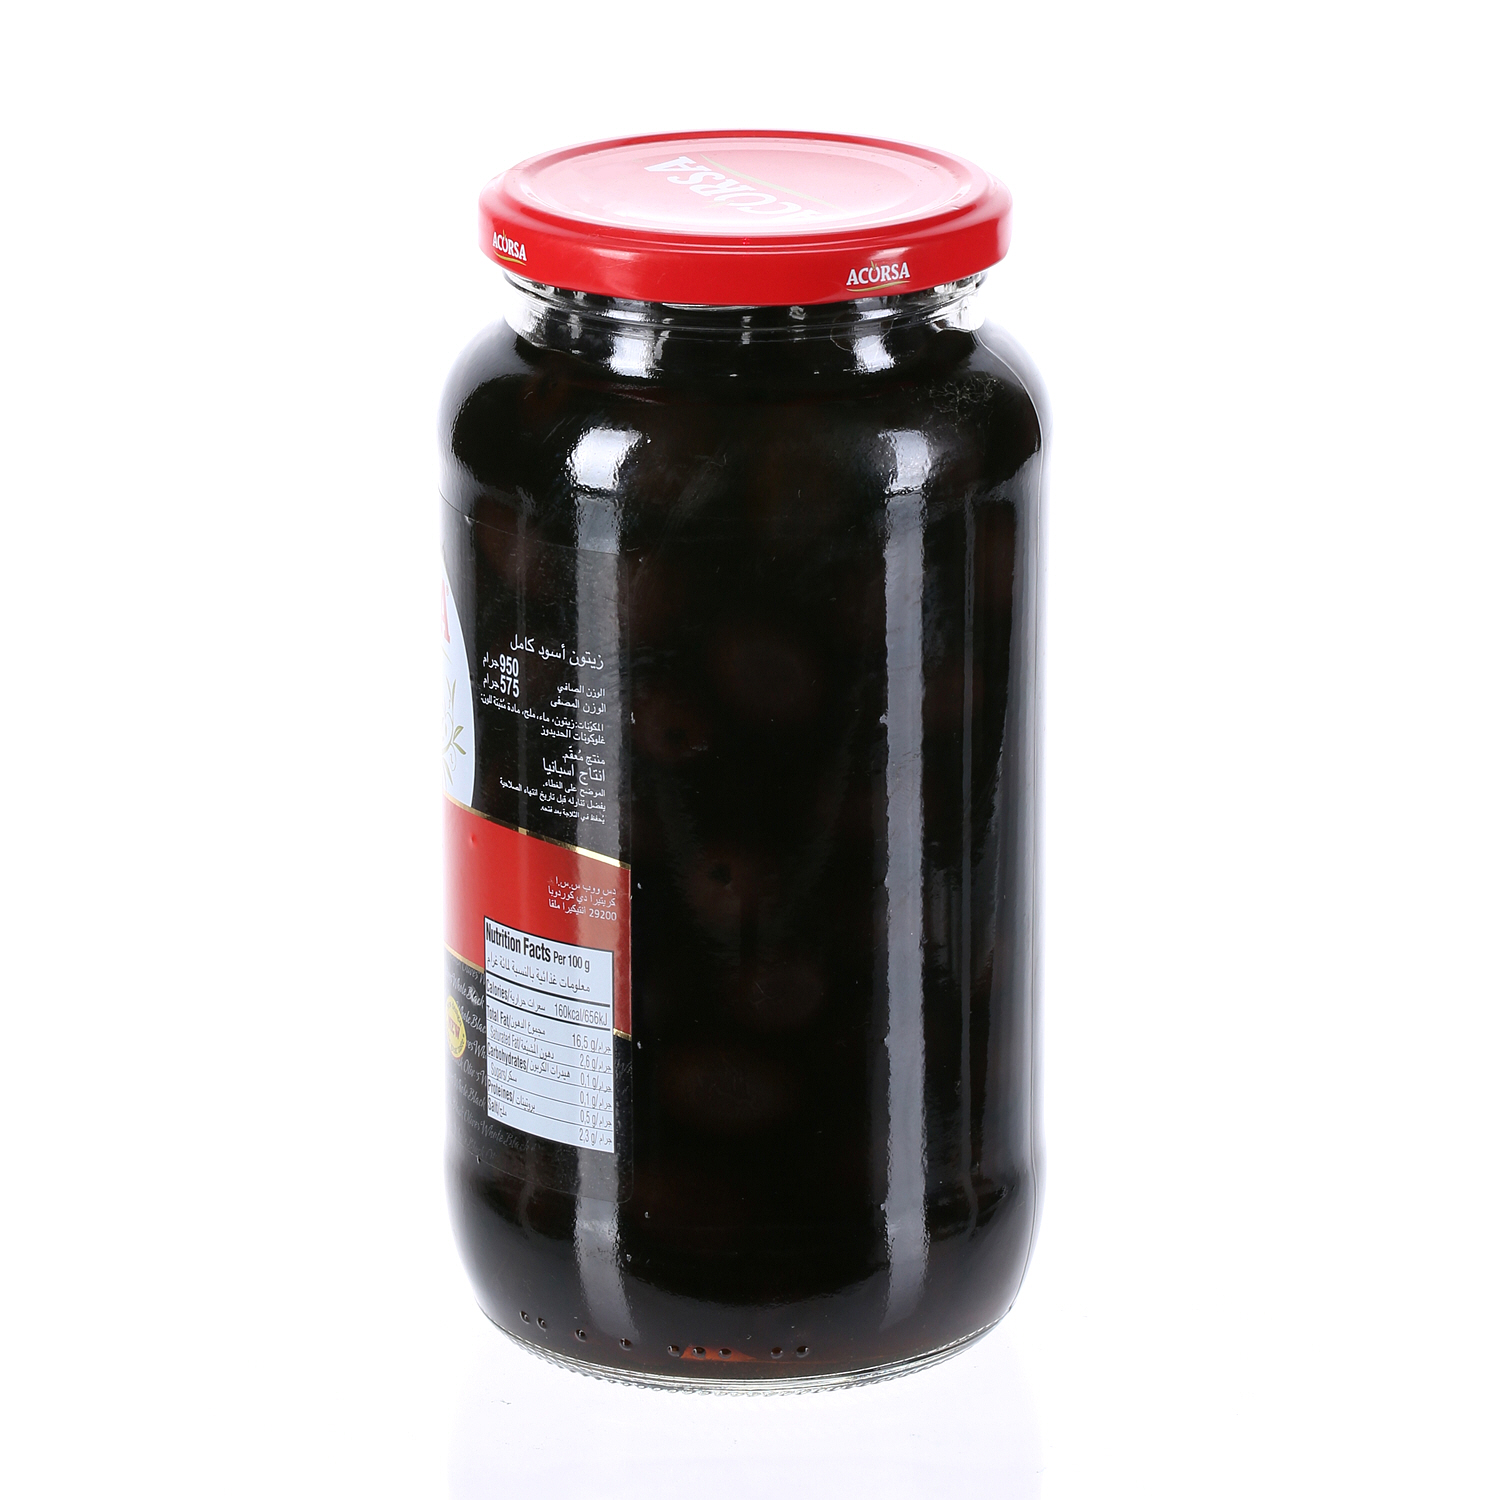 Acorsa Olives Black Plain Jar 575 g